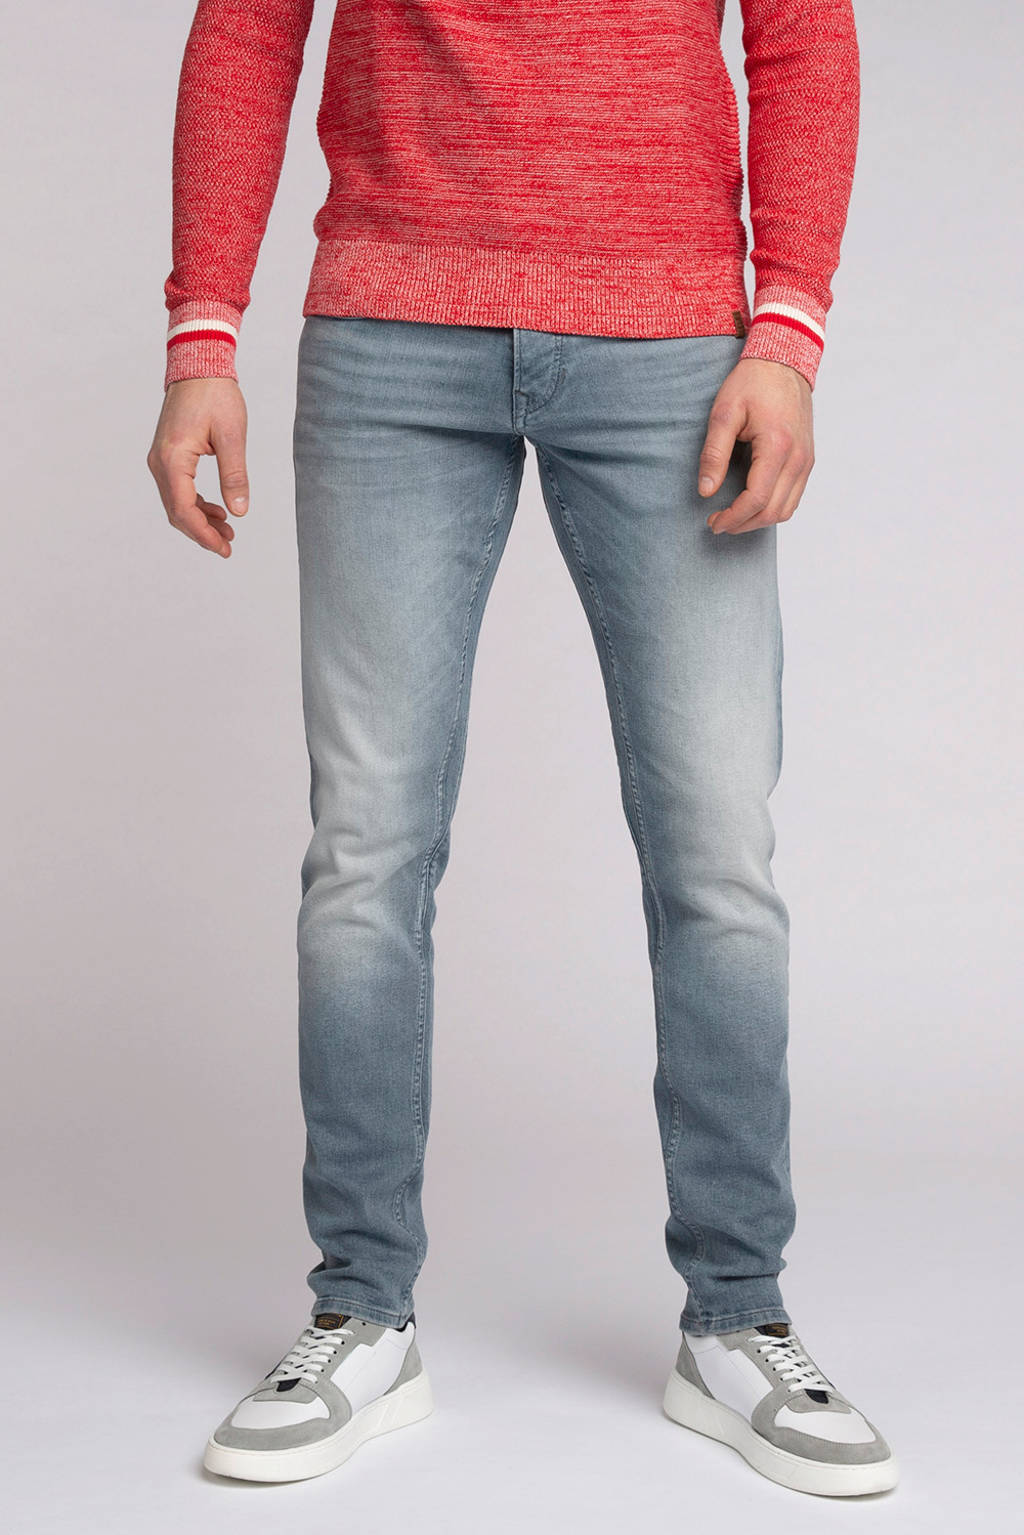 PME Legend slim fit jeans Tailwheel comfort grey blue, Comfort Grey Blue